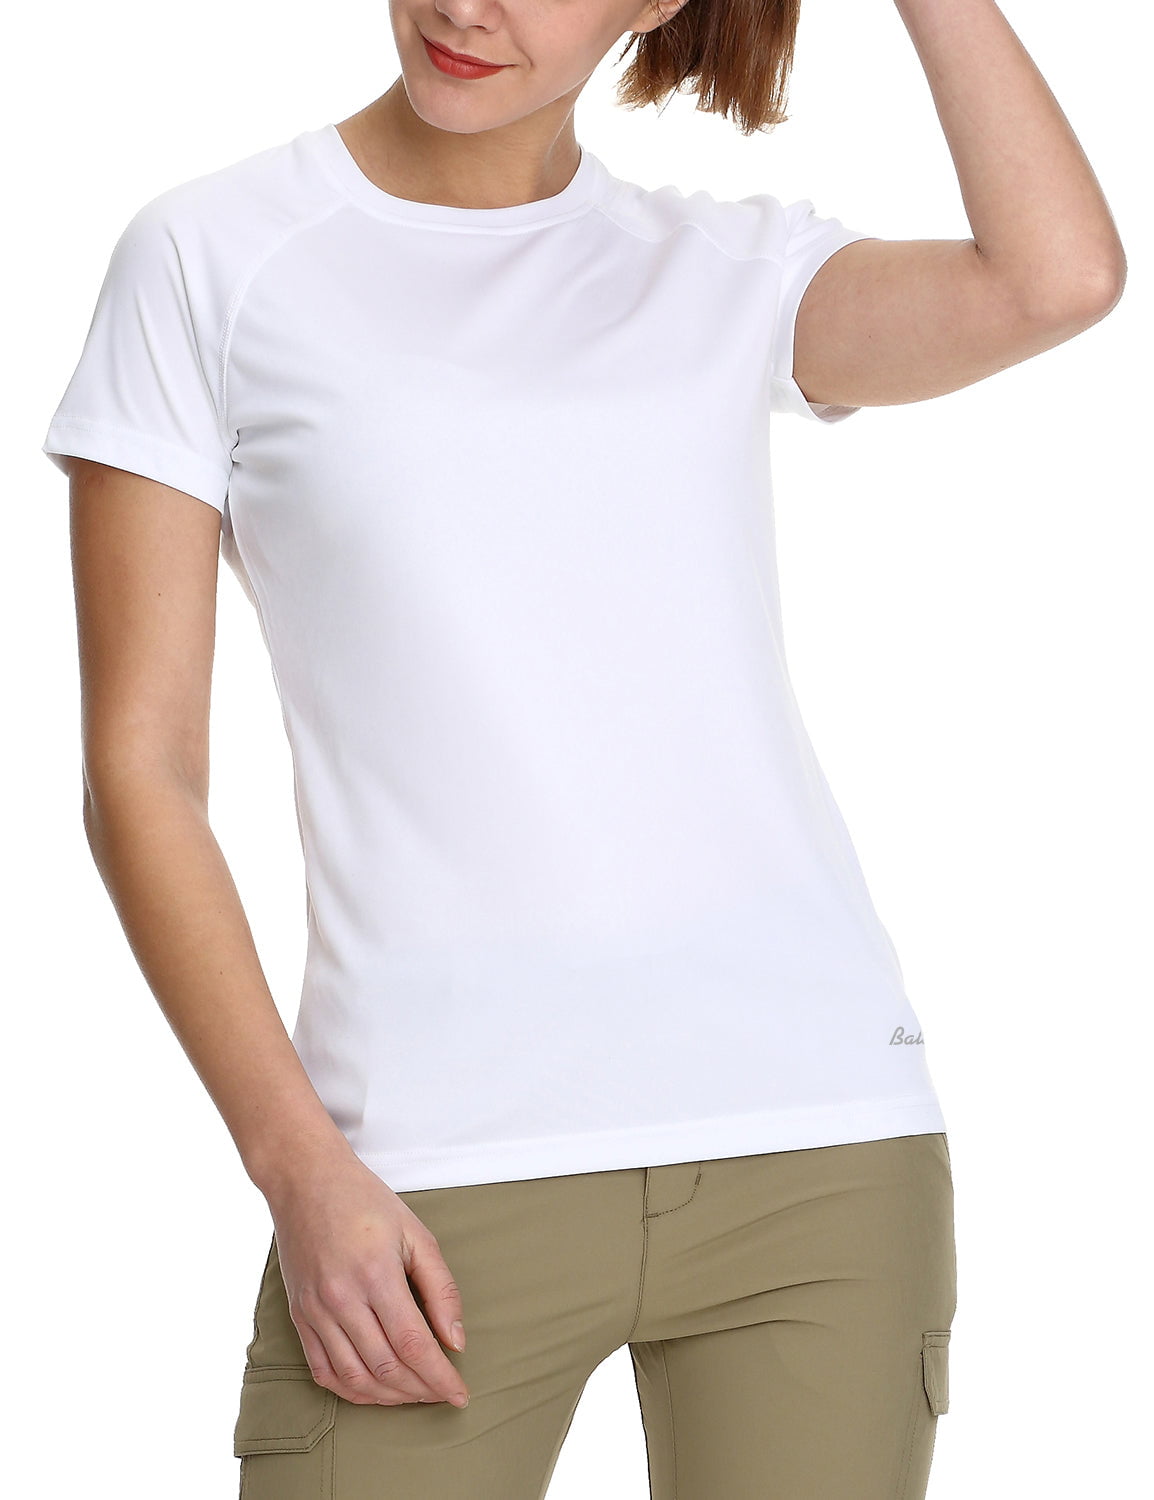 UV Sun Protection T-Shirt Outdoor Performance Quick Dry Sunshirts BALEAF Women's Short Sleeve Shirts UPF 50 